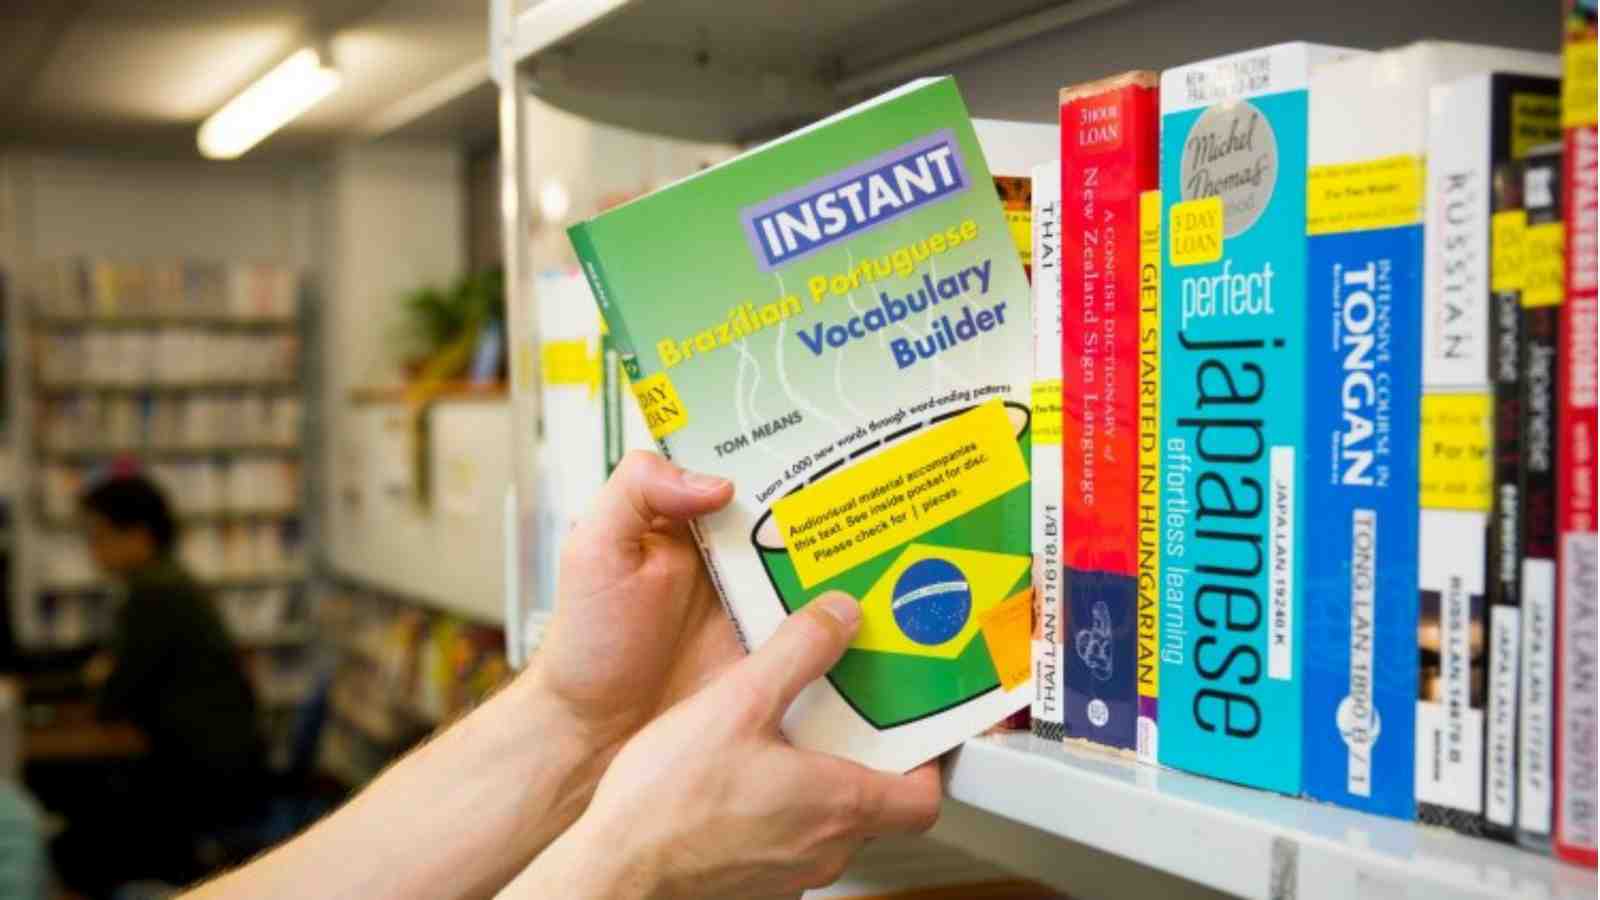 A hand pulls a book off of a bookshelf titled – Instant Brazilian Portuguese Vocabulary builder.